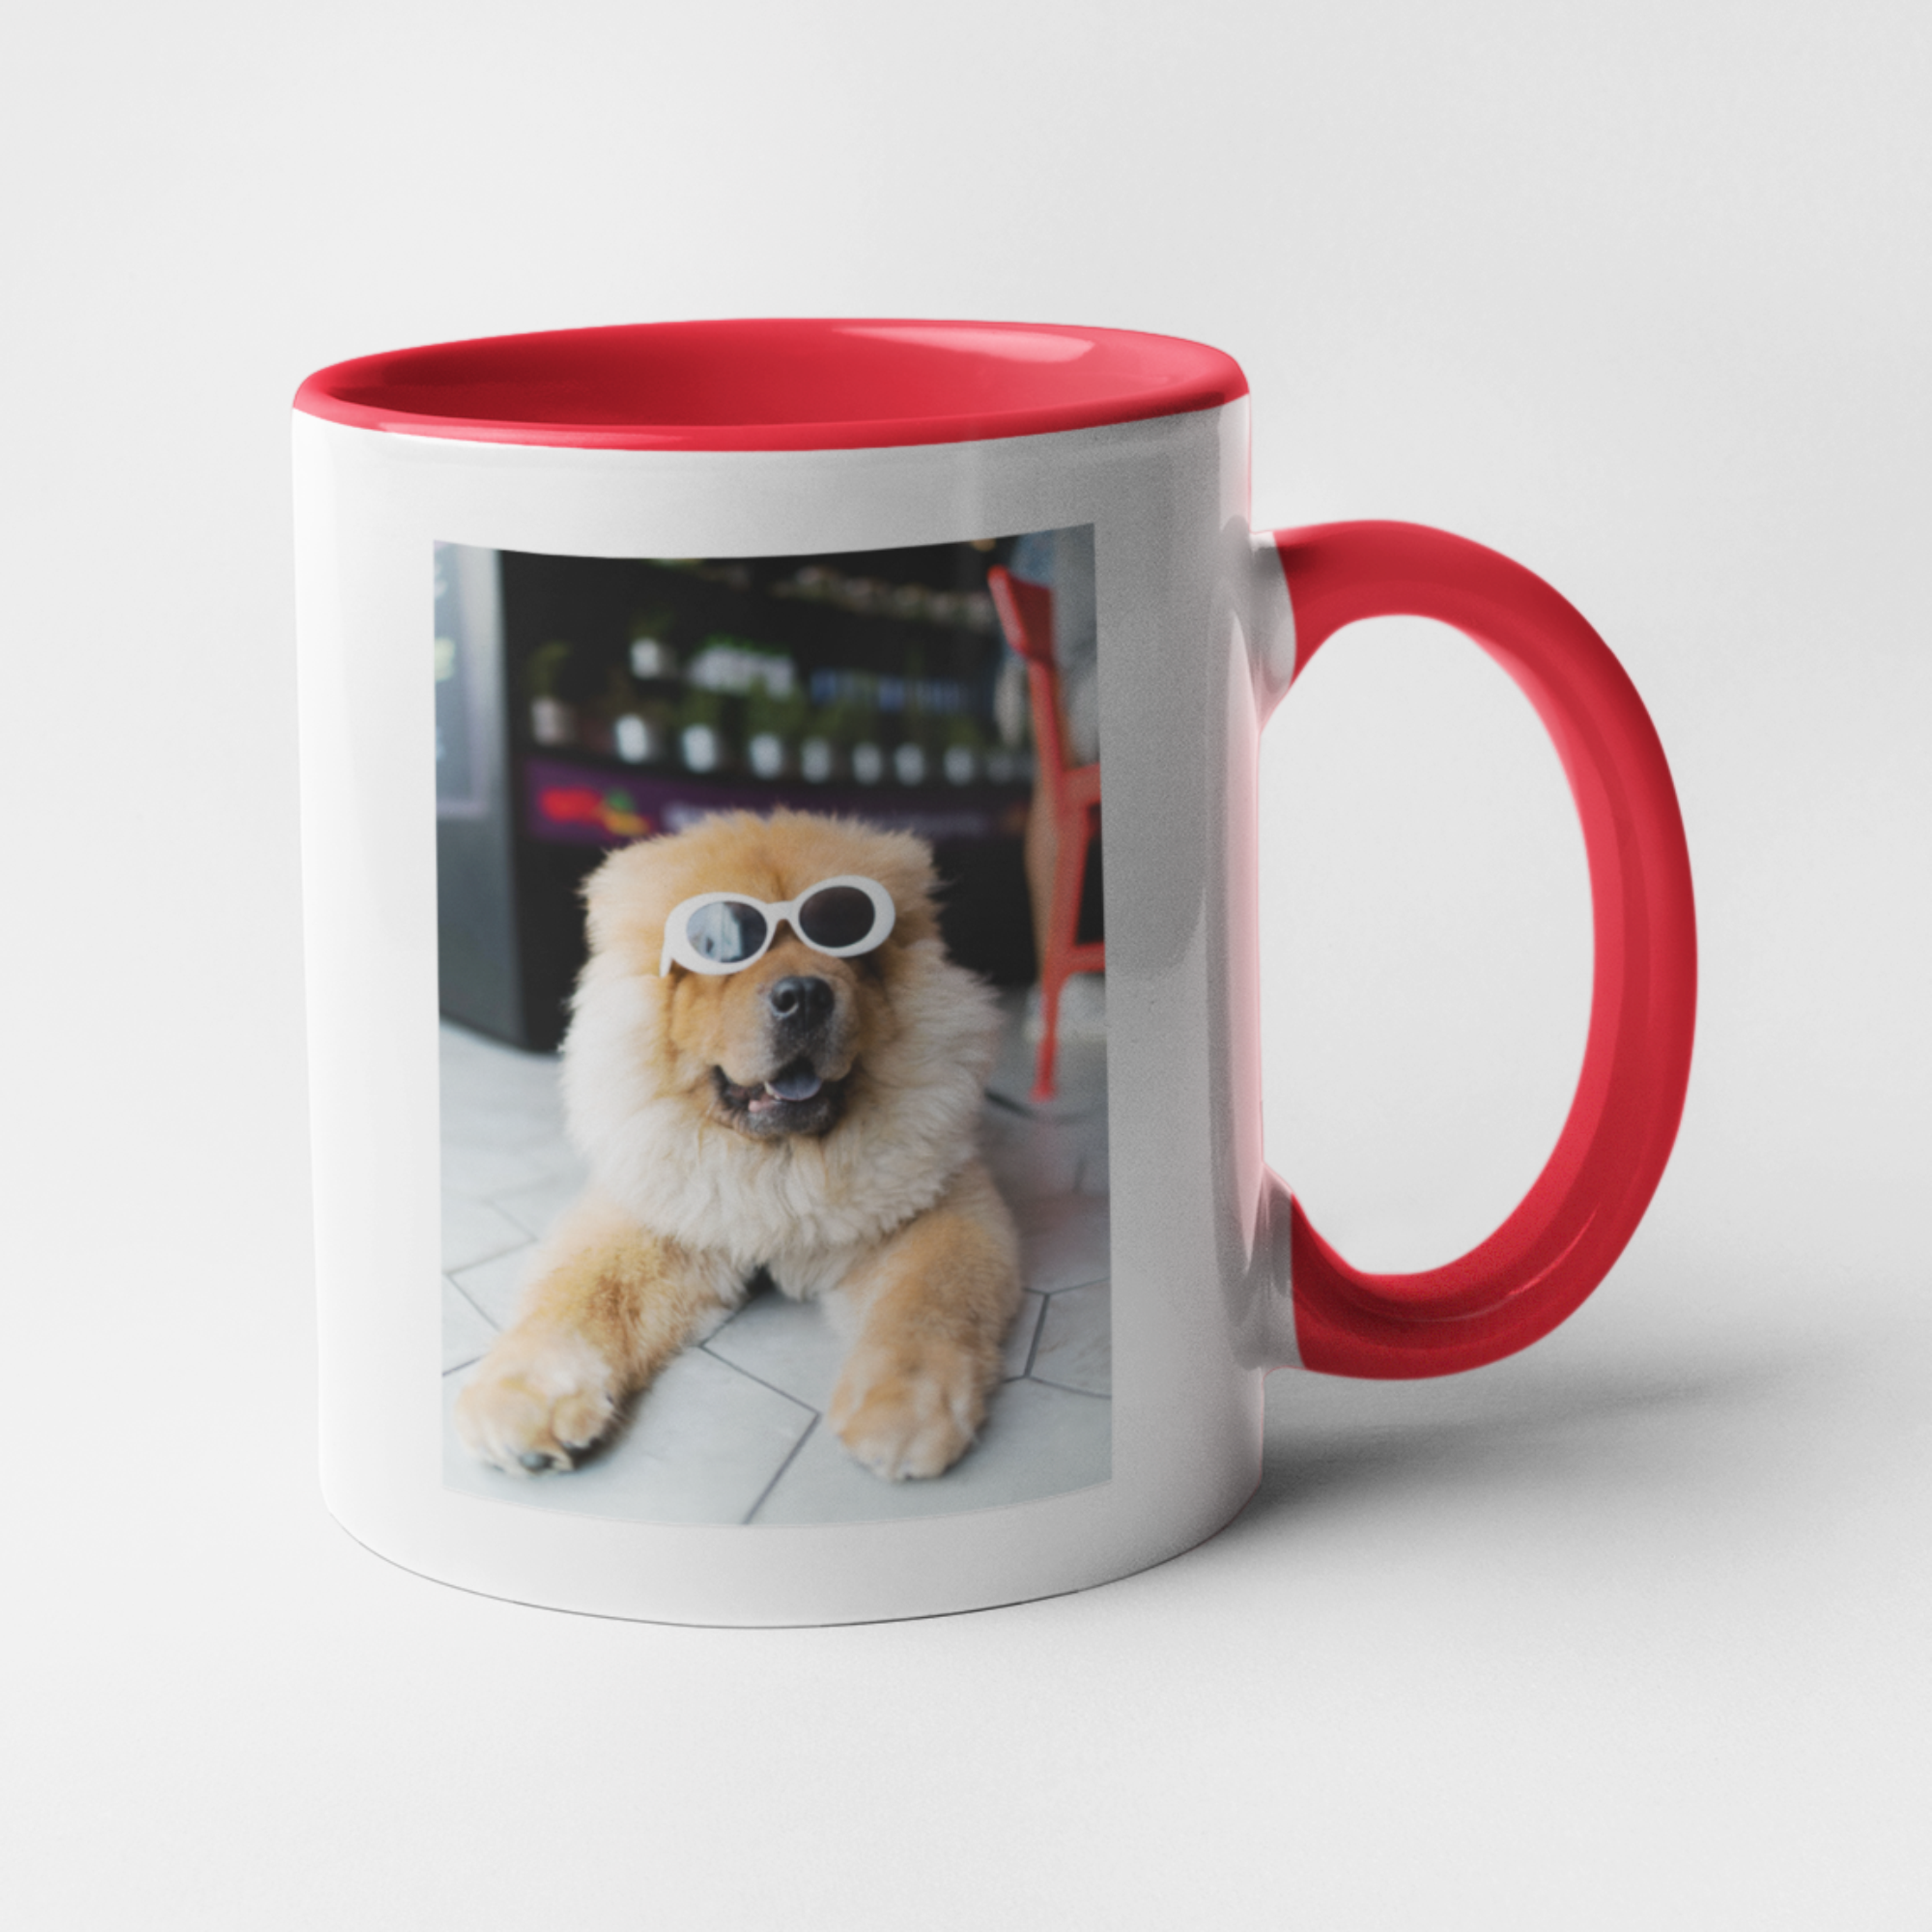 Custom Coffee Mugs  Personalized Coffee Mugs